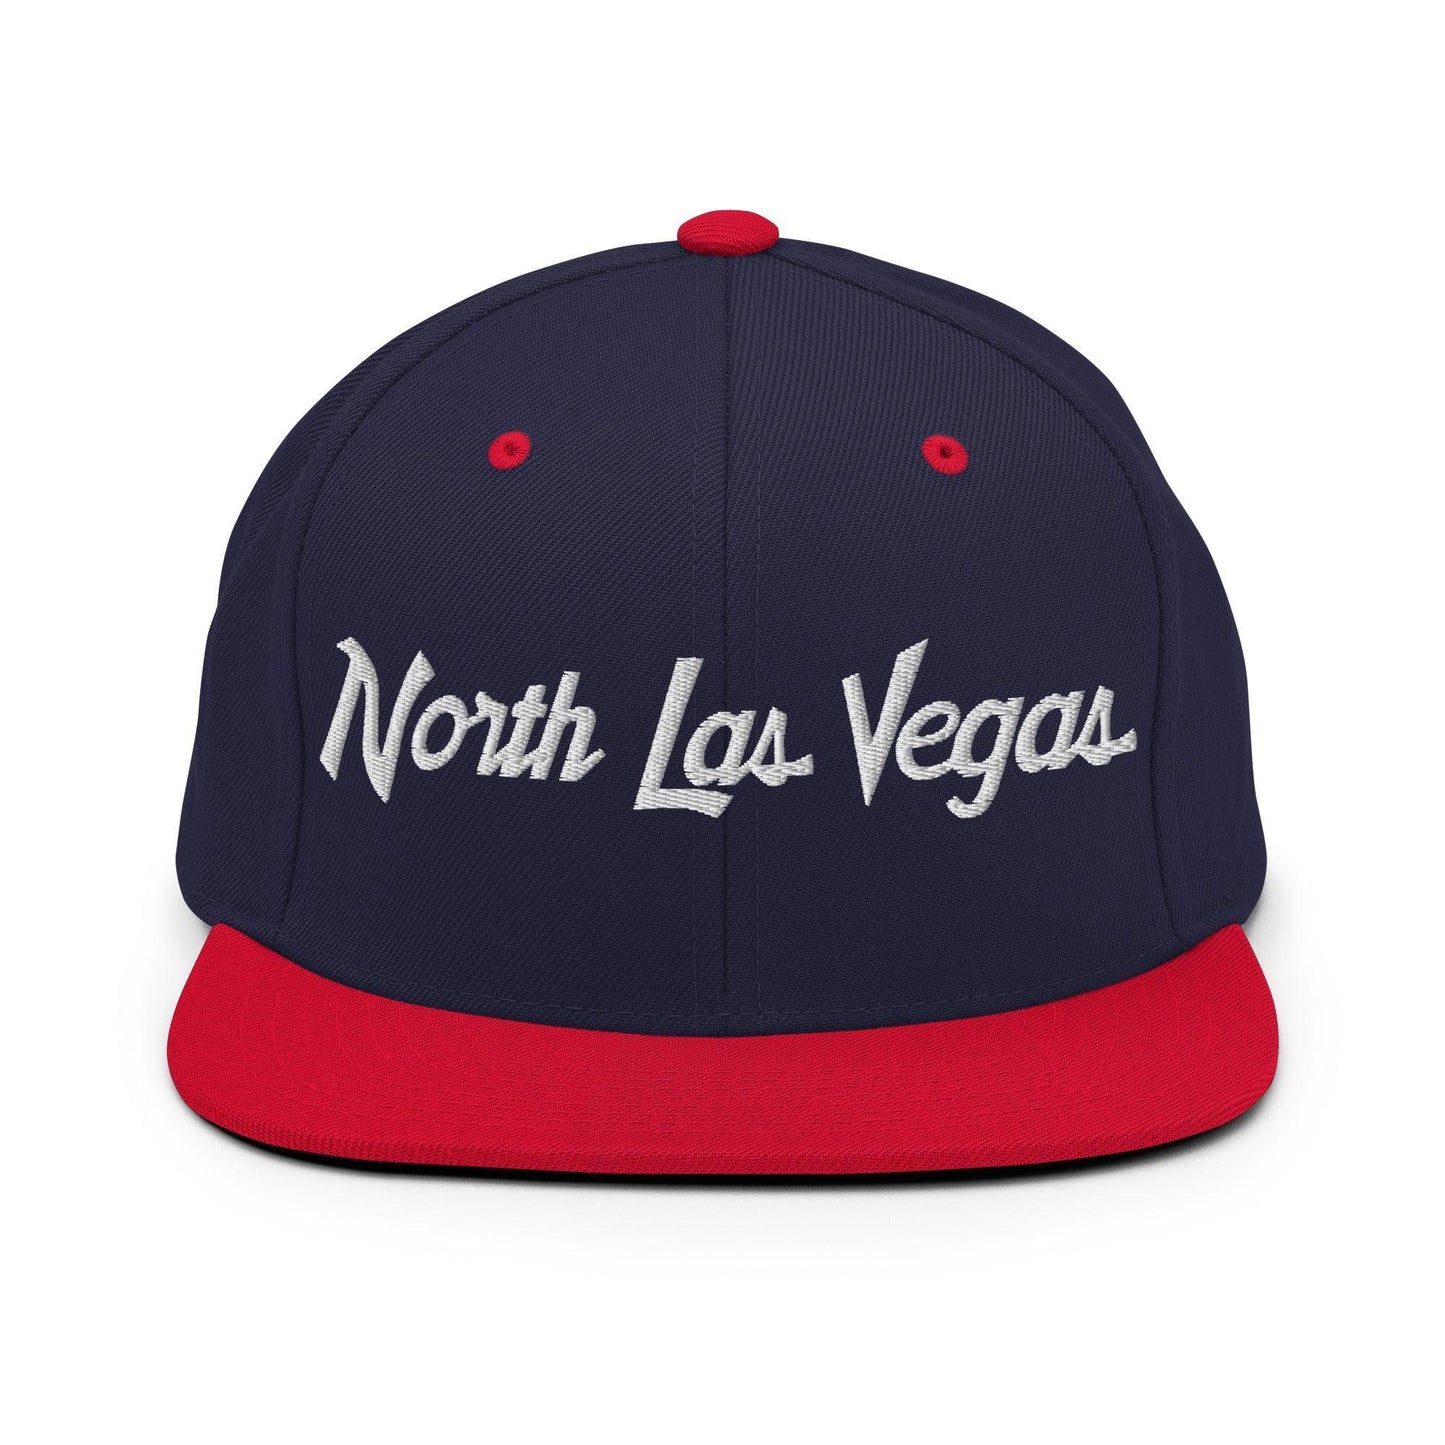 North Las Vegas Script Snapback Hat Navy Red